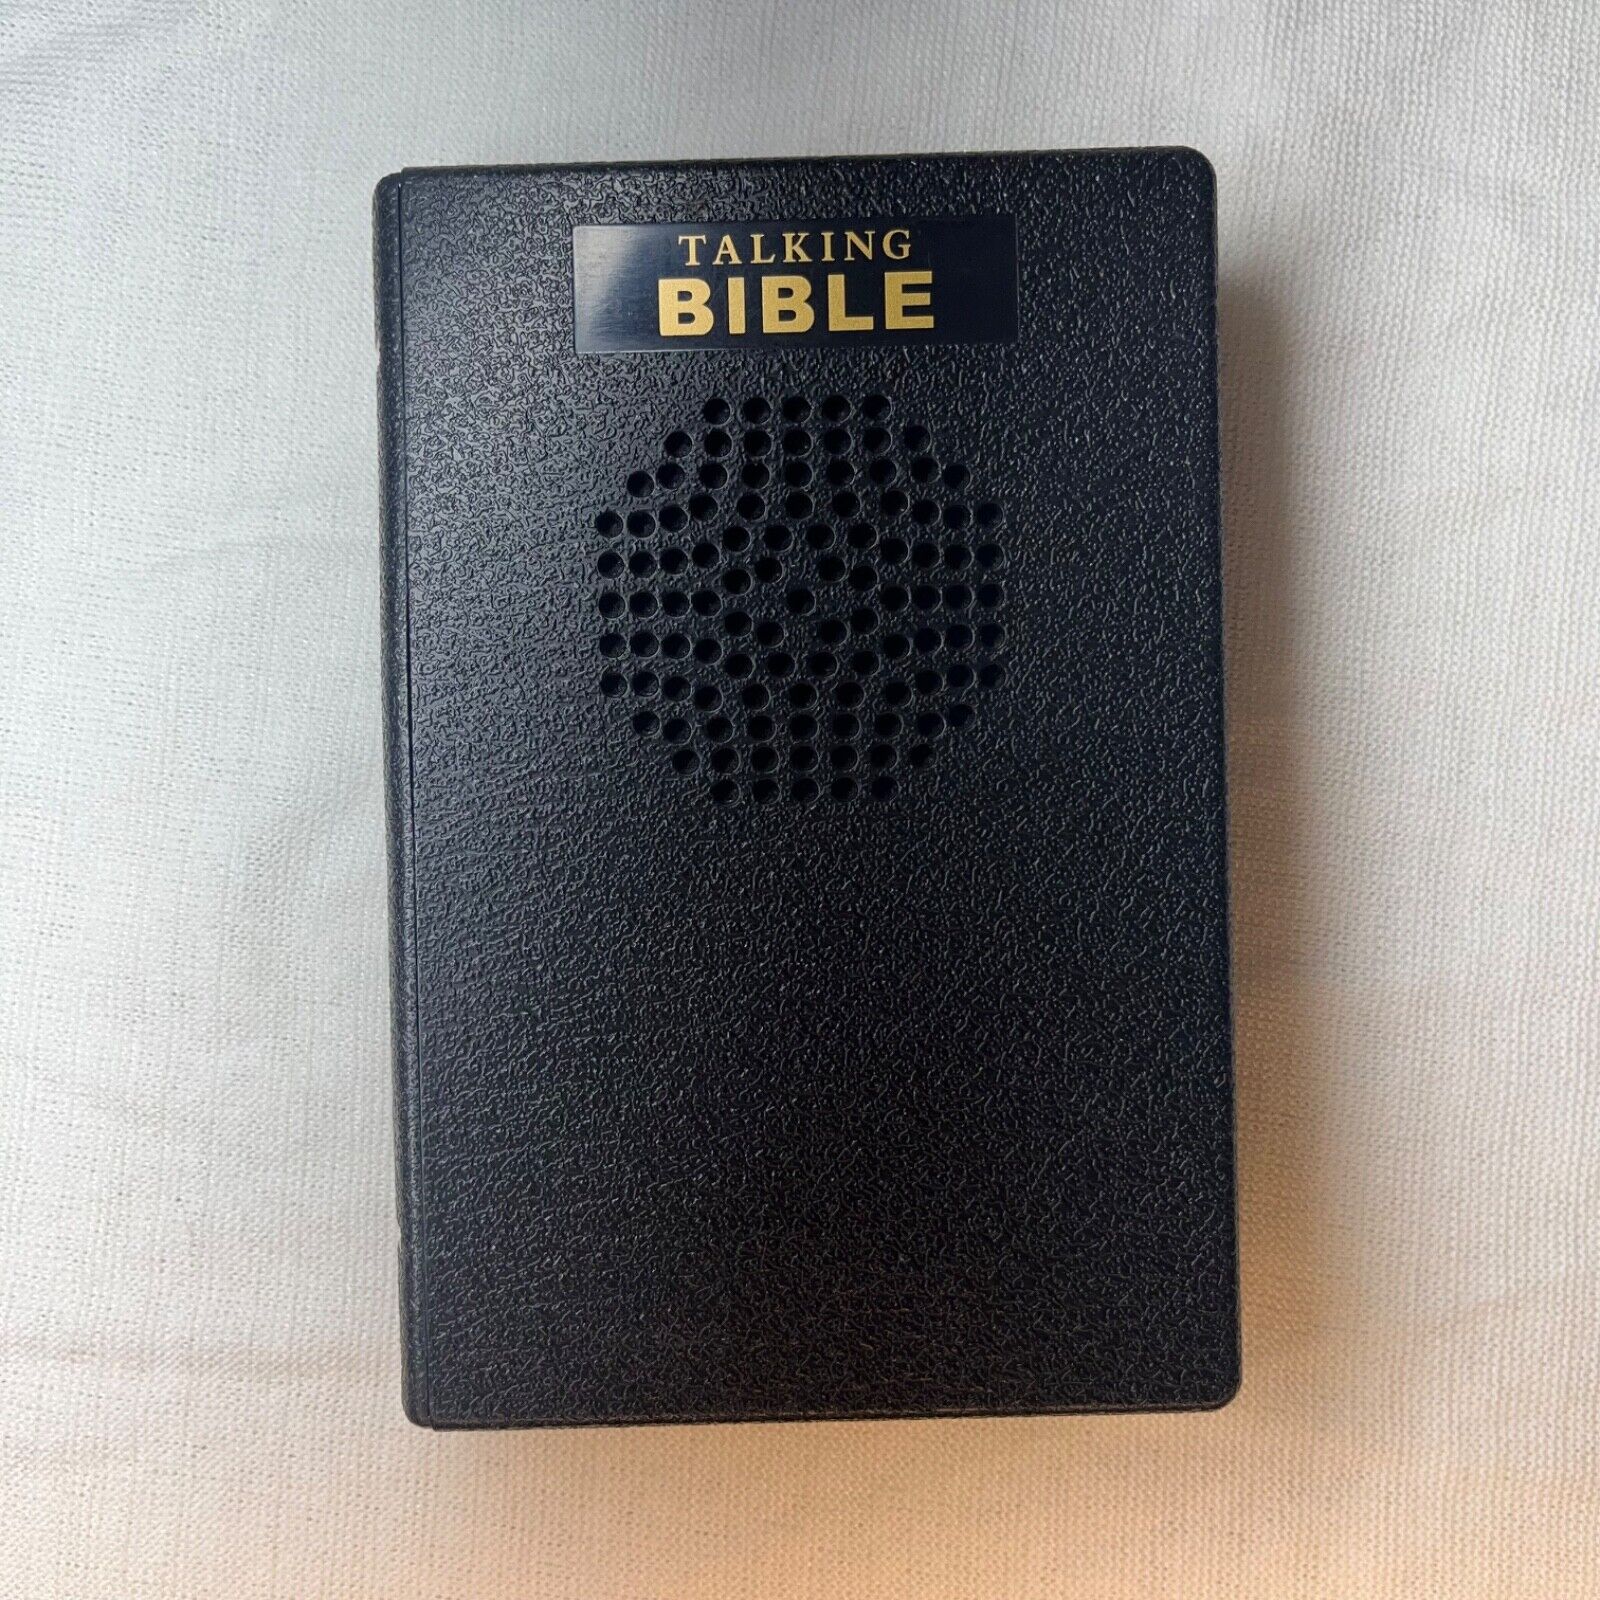 Talking Digital KJV Bible - King James Version - English